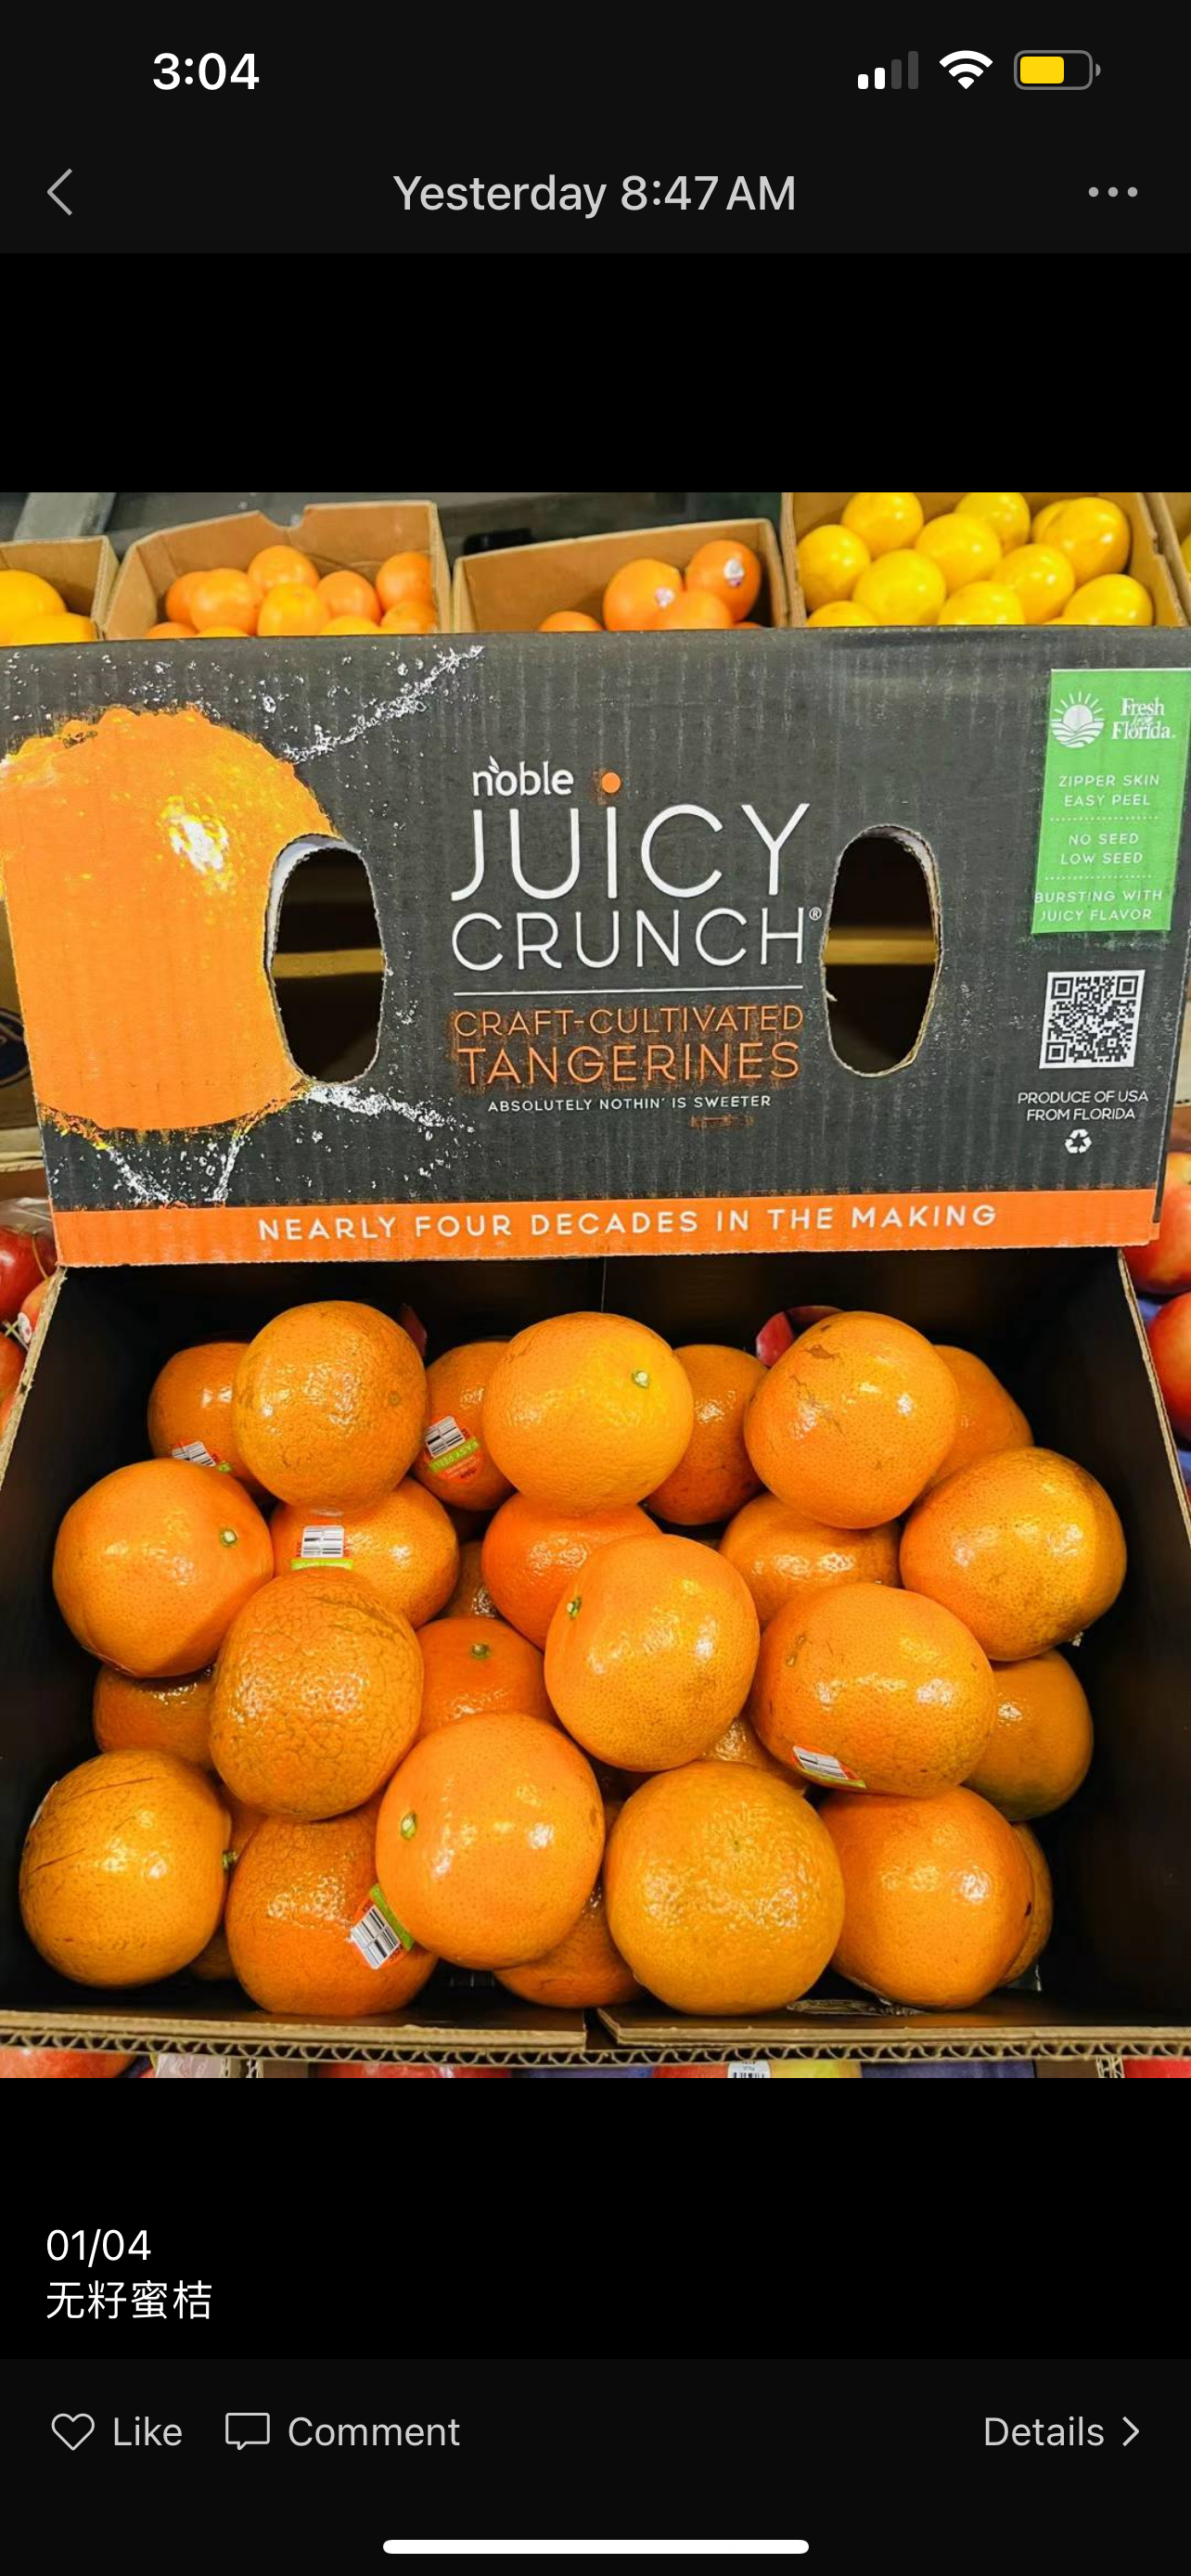 Juicy Crunch Tangerine 无籽蜜橘 强烈推荐！2磅